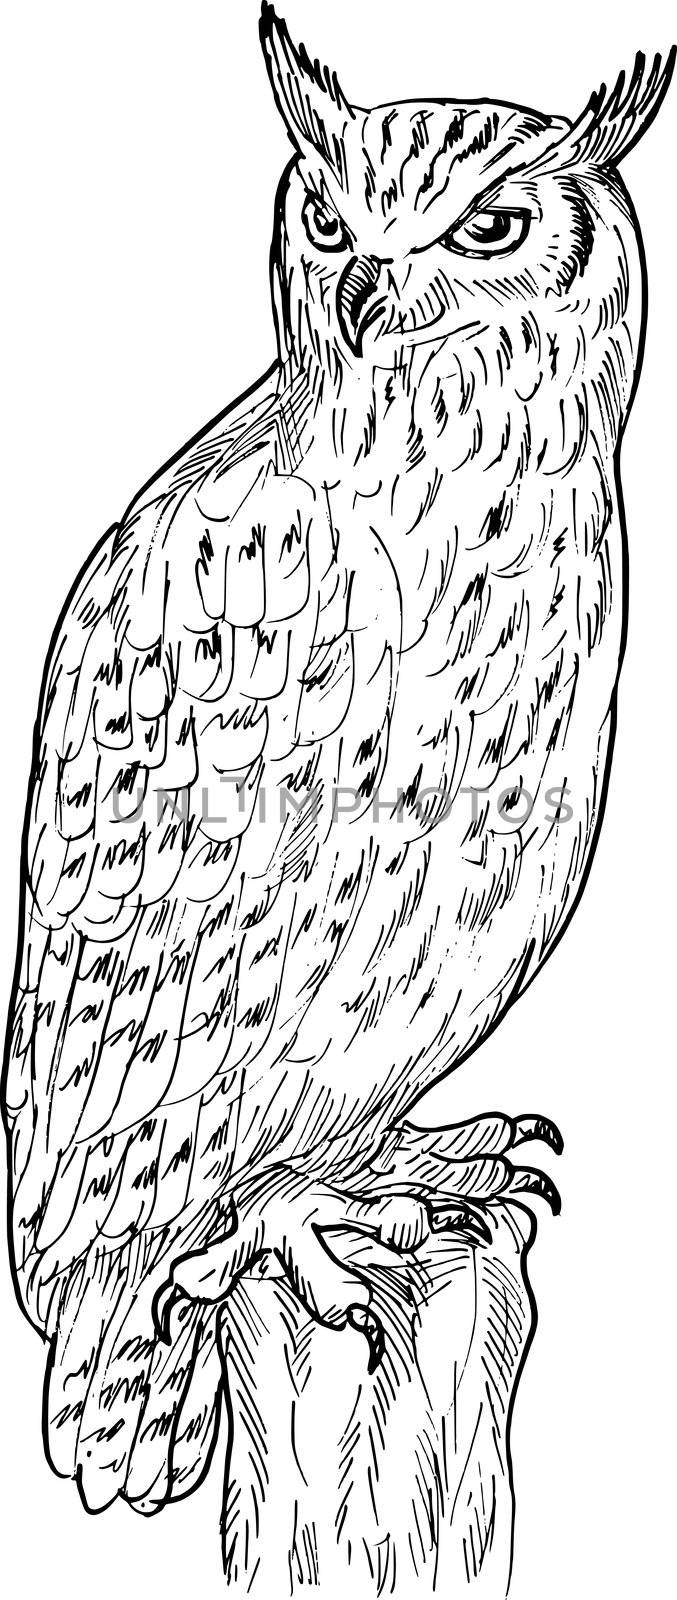 Eagle Owl drawing by patrimonio